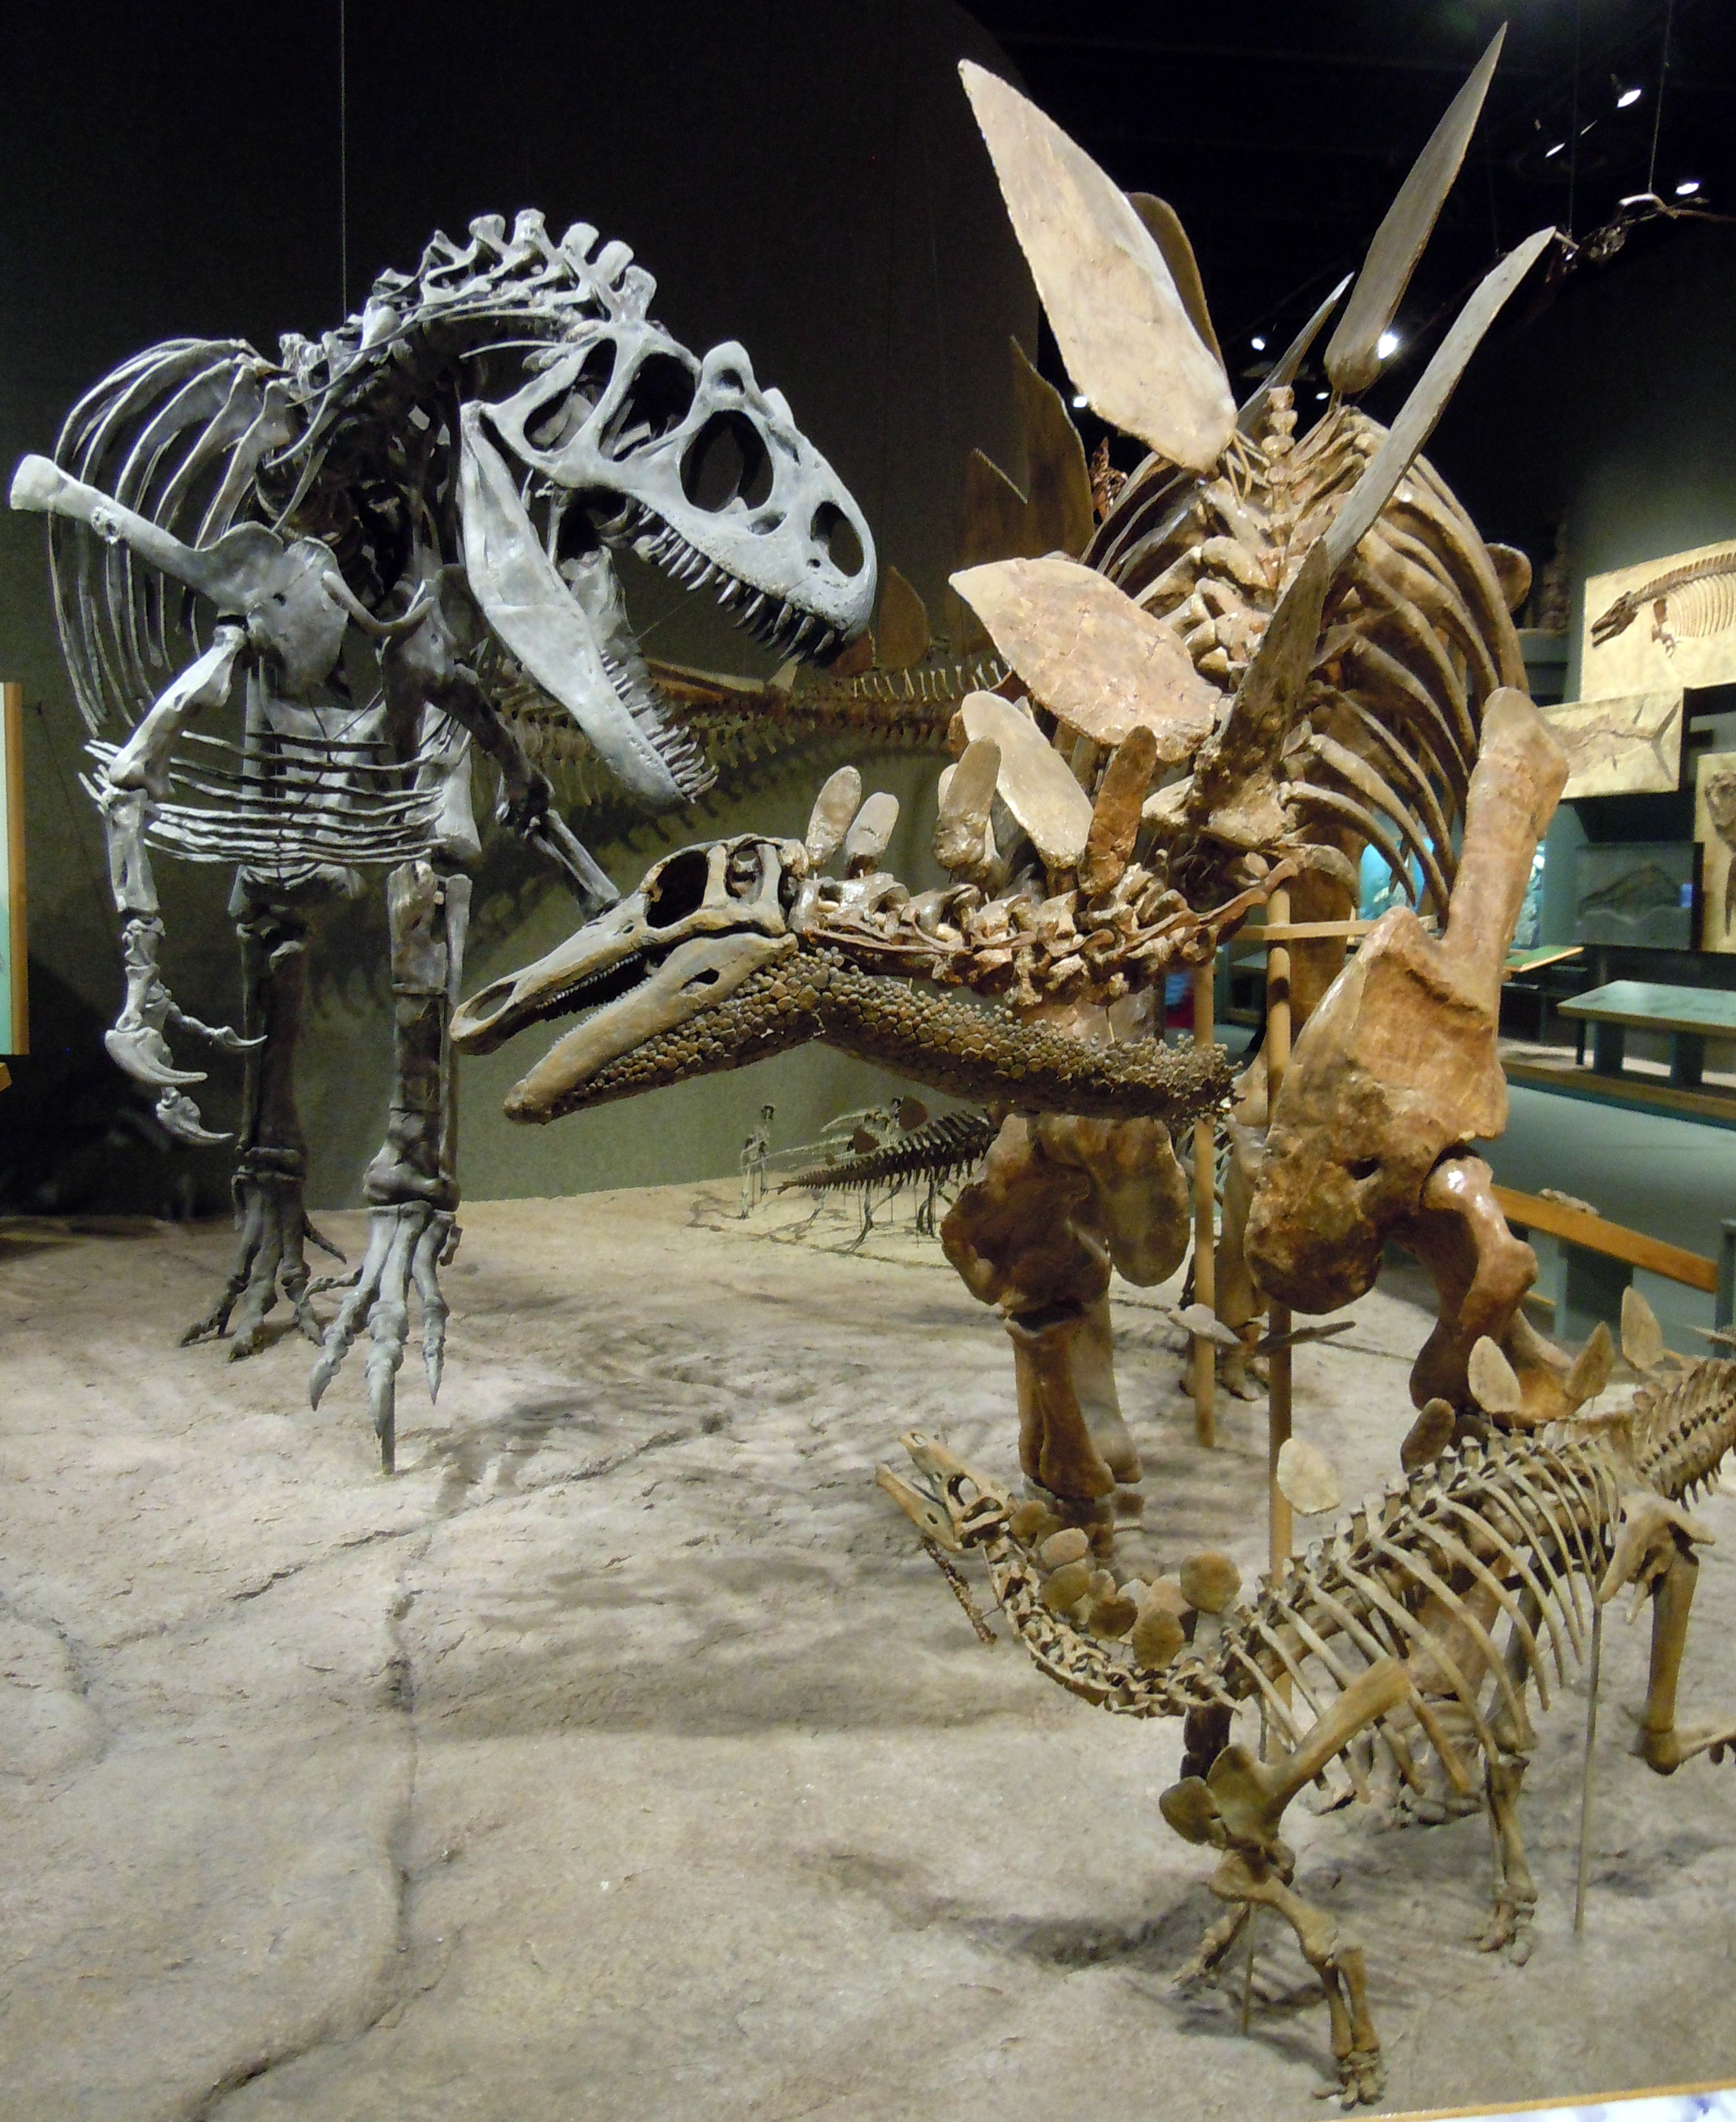 Stegosaurus and its predator Allosaurus